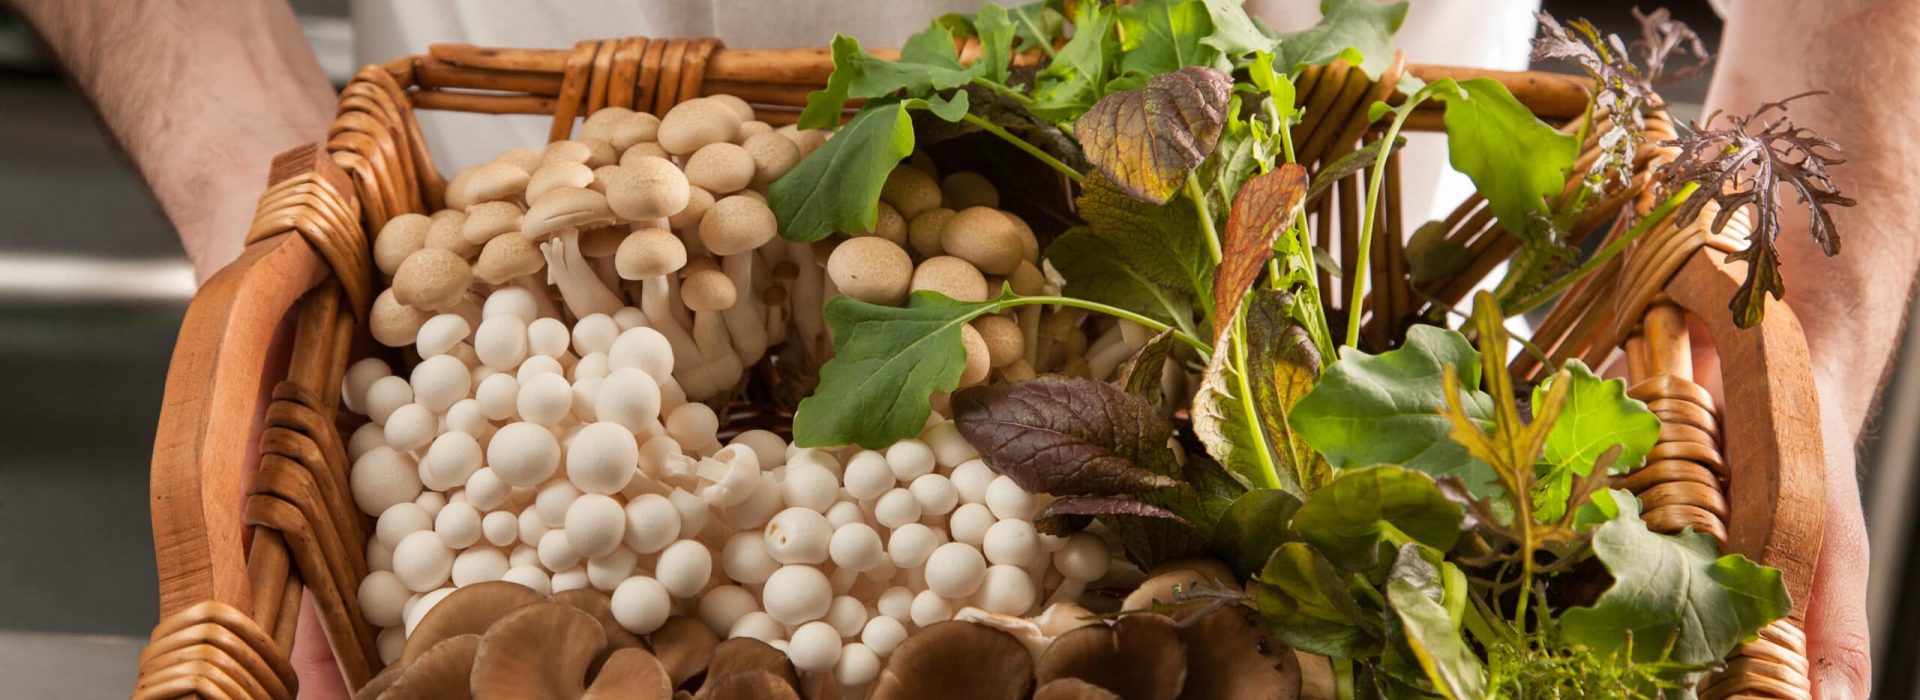 a wicker basket full of fresh mushrooms